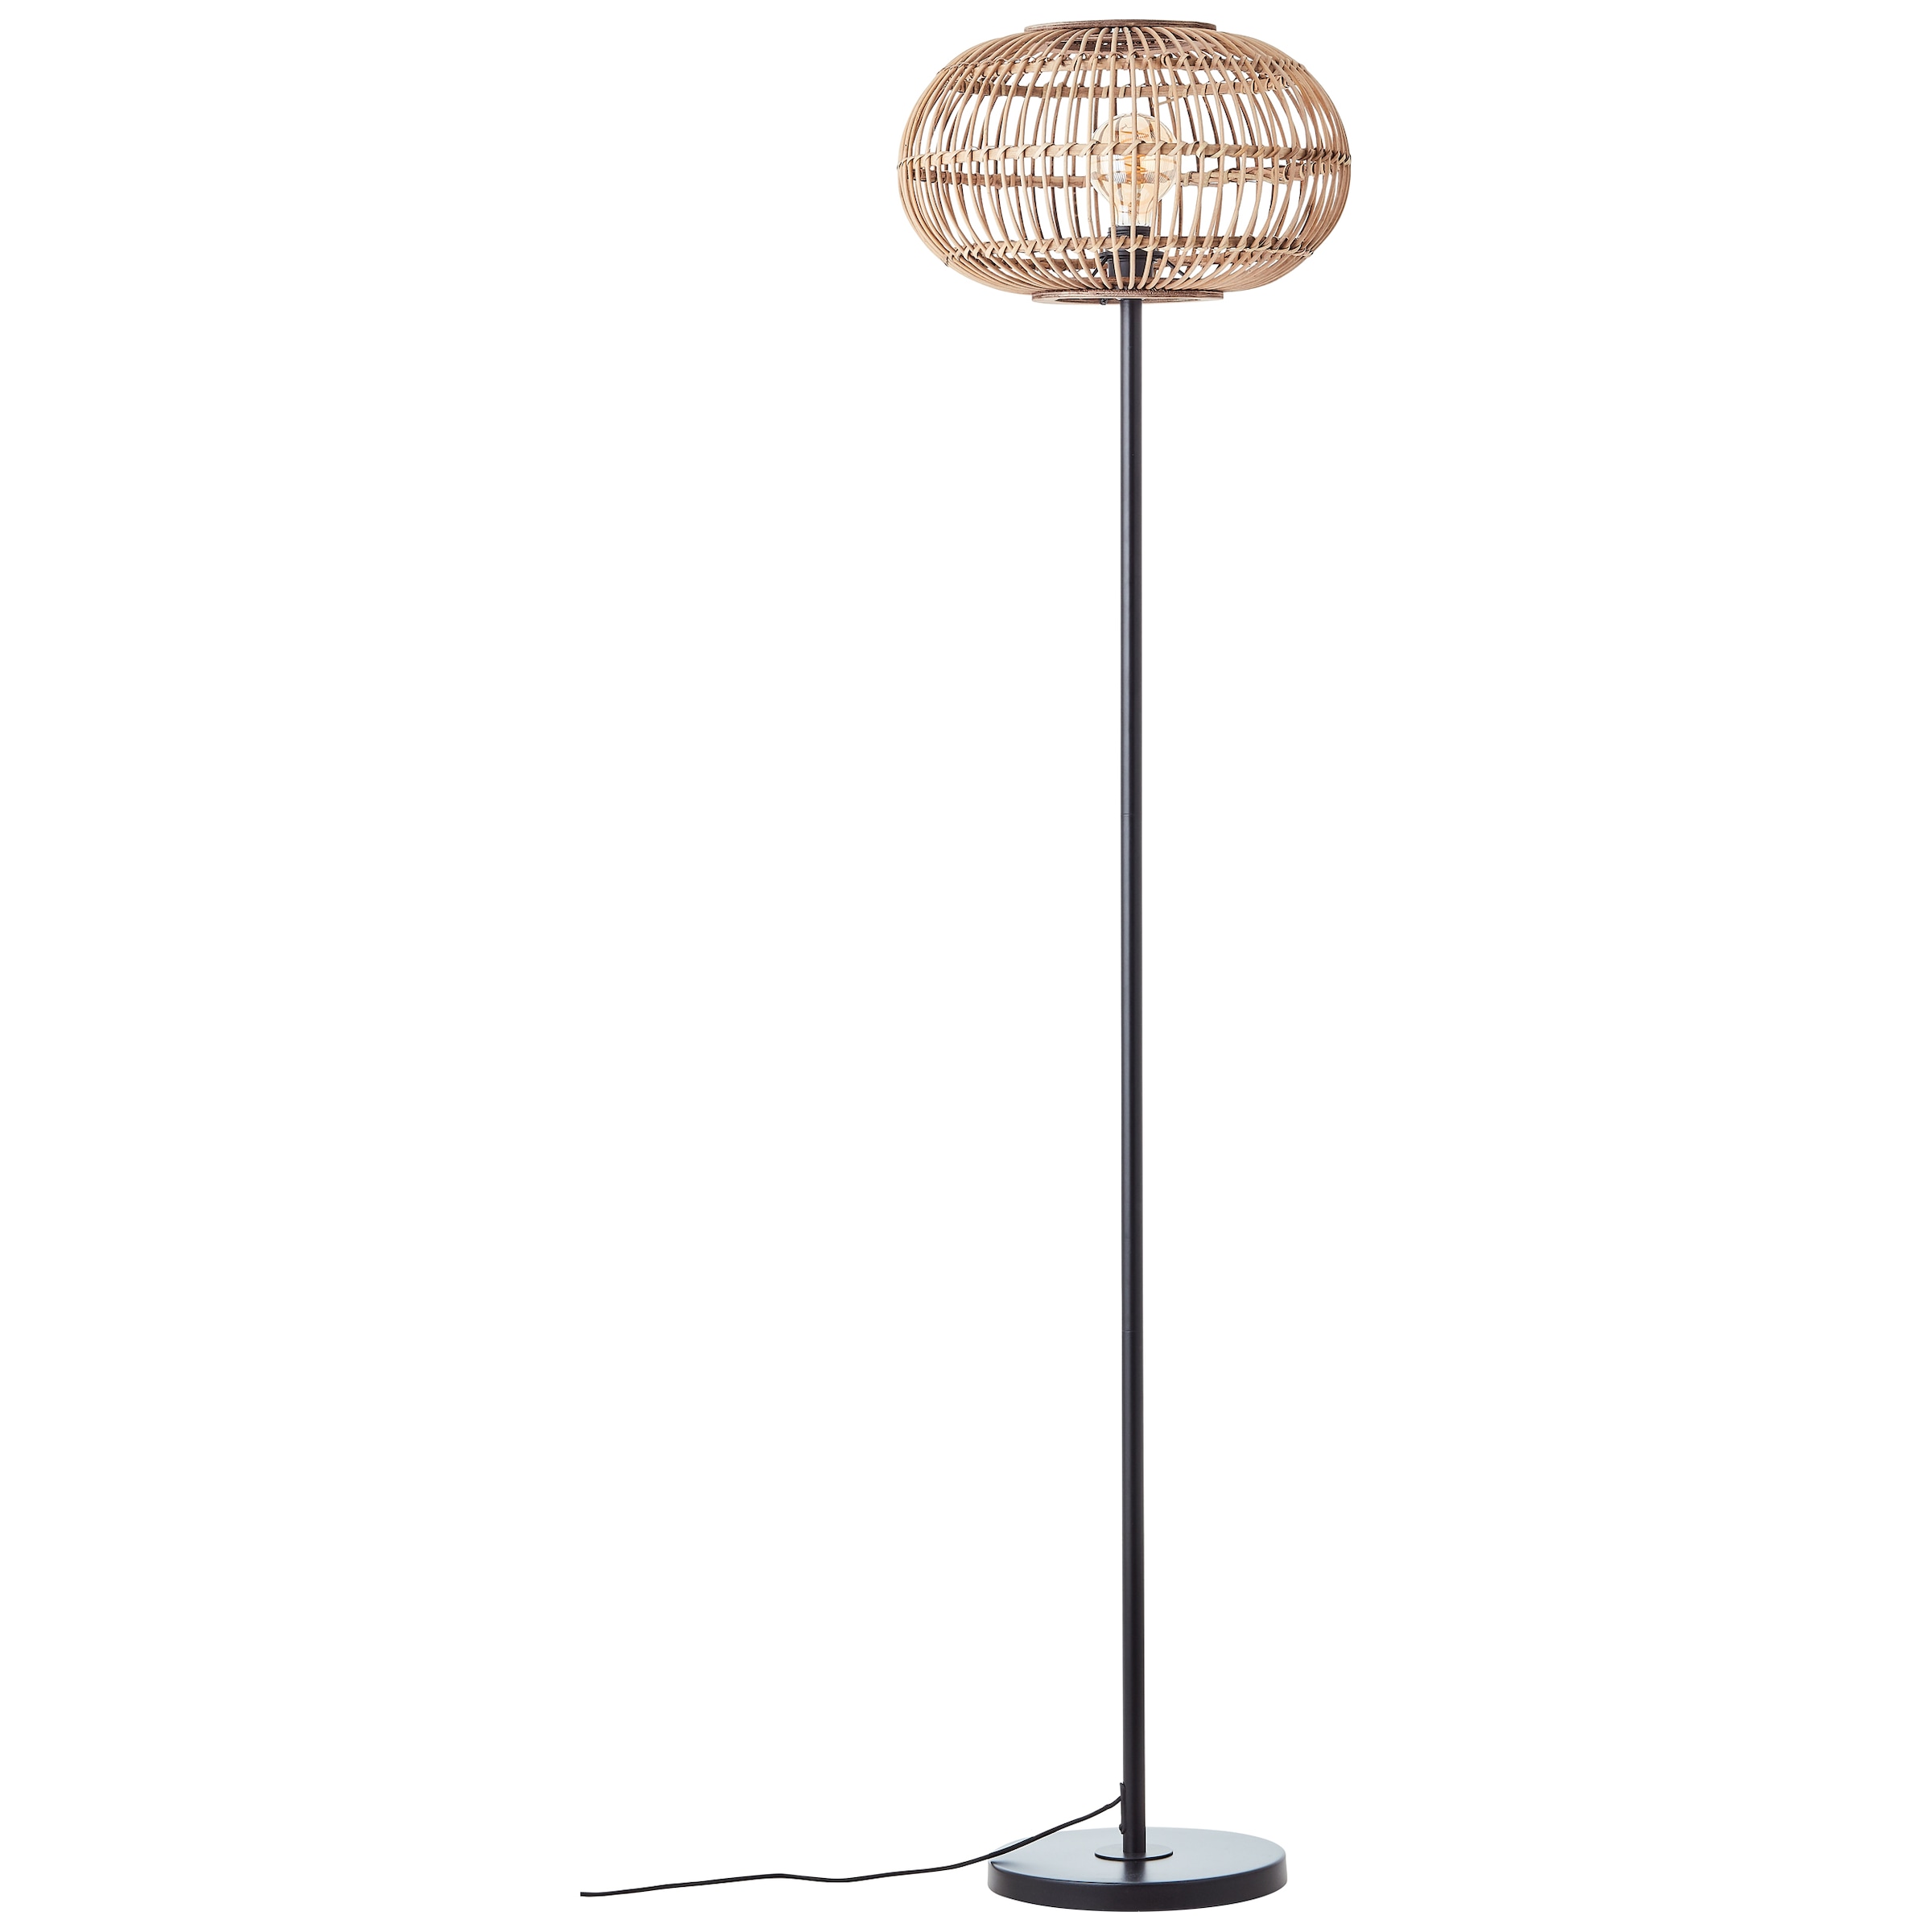 Brilliant Stehlampe »Woodball«, 1 flammig-flammig, mit Bambus Schirm, 153 x 38 cm, E27, matt schwarz/natur